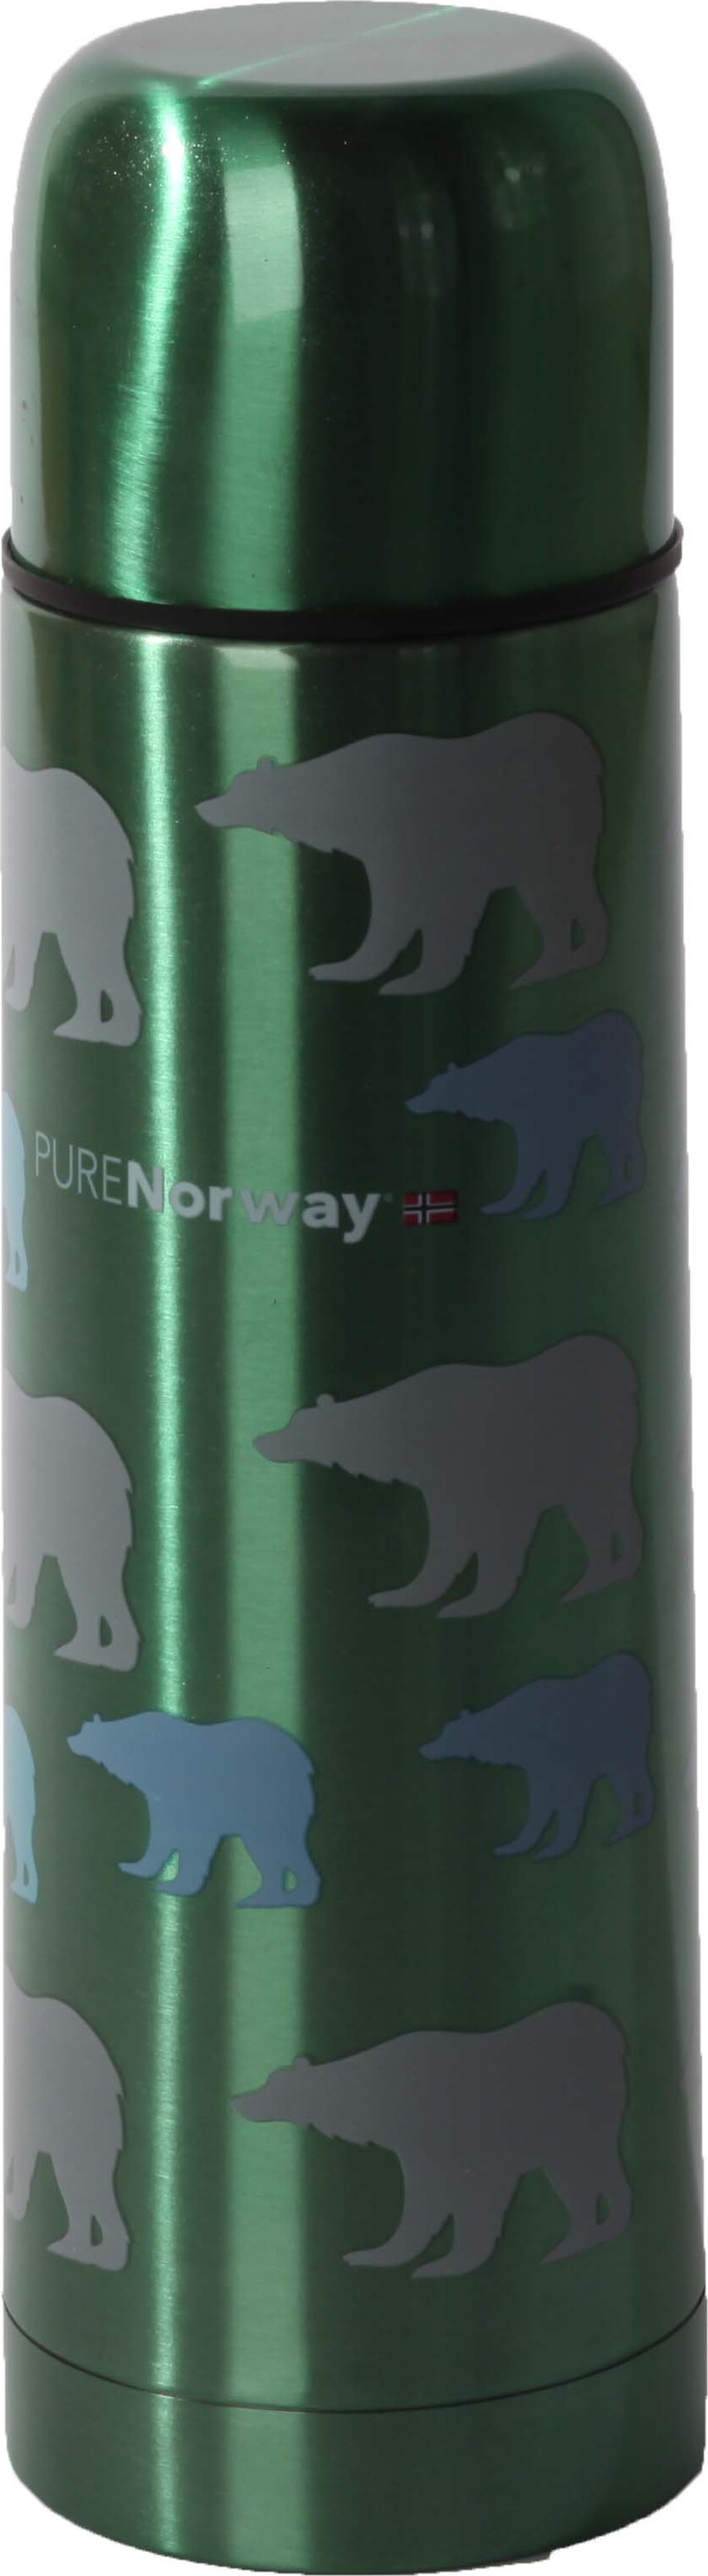 Go Purenorway - Drikkedunk Metalic 500 Ml - Isbjørn